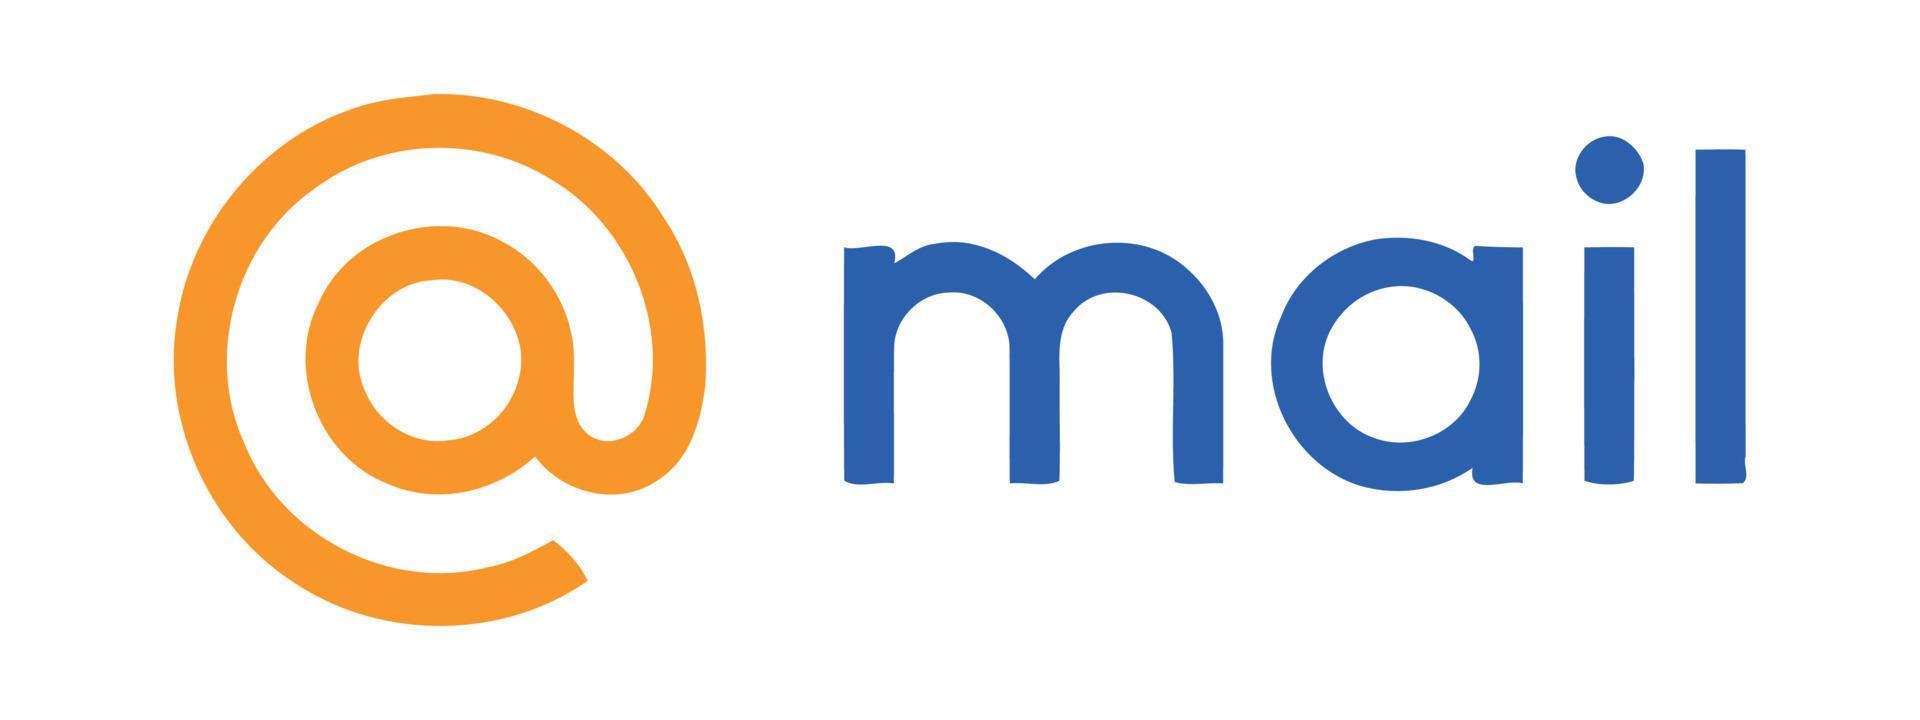 Mail.ru logo on transparent background vector